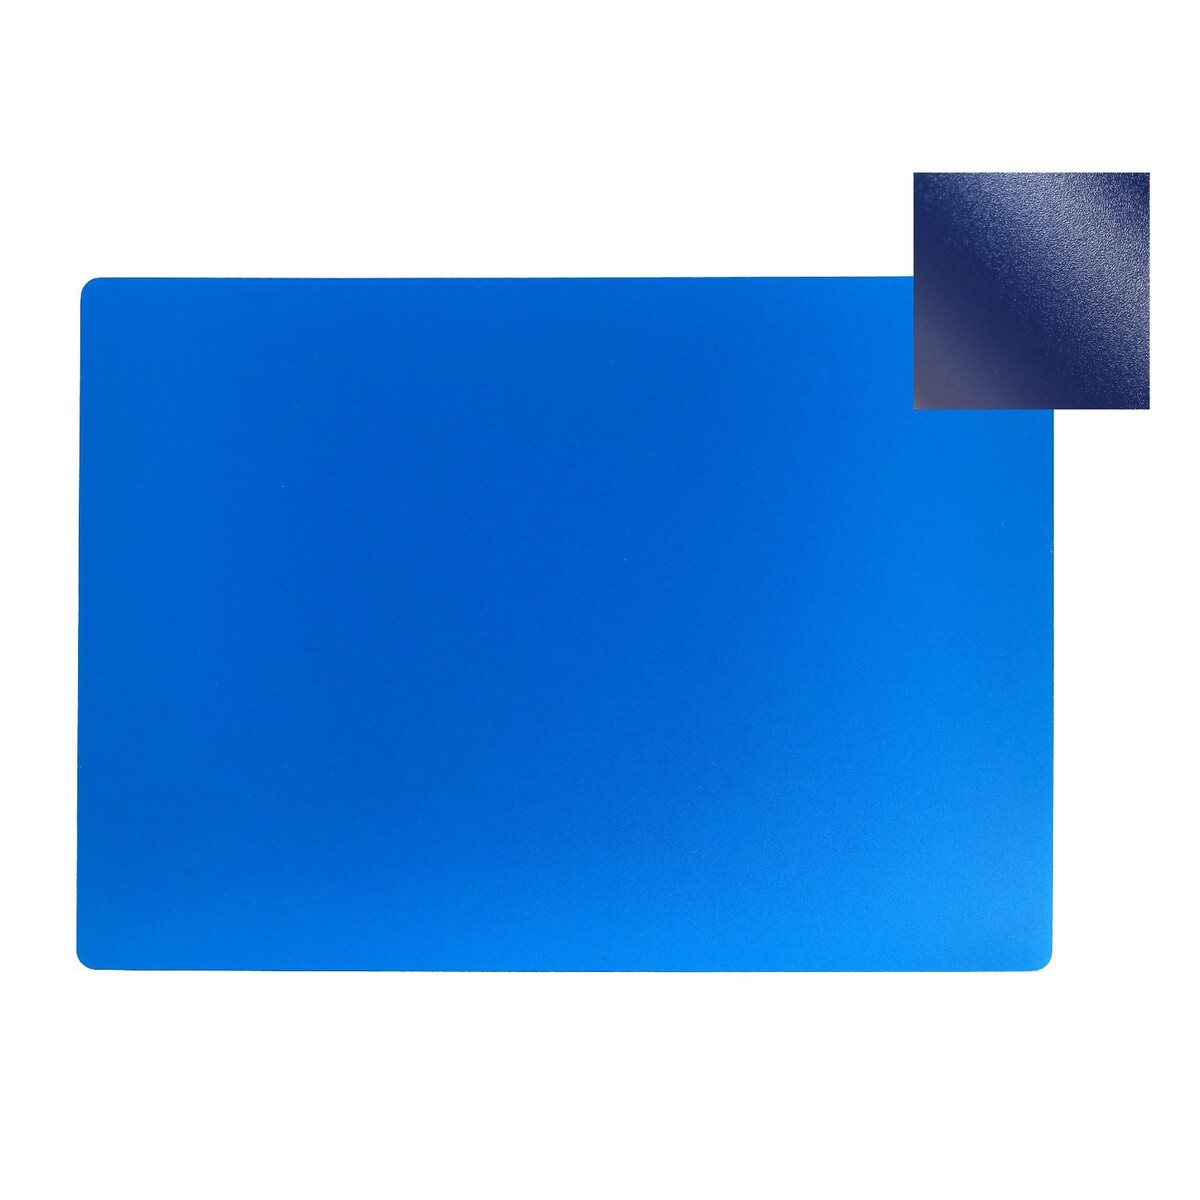 Накладка на стол пластиковая а4, 339 х 244 мм, 500 мкм, прозрачная, темно-синяя (подходит для офиса) накладка на стол пластиковая а4 339 х 244 мм 500 мкм прозрачная тёмно синяя подходит для офиса